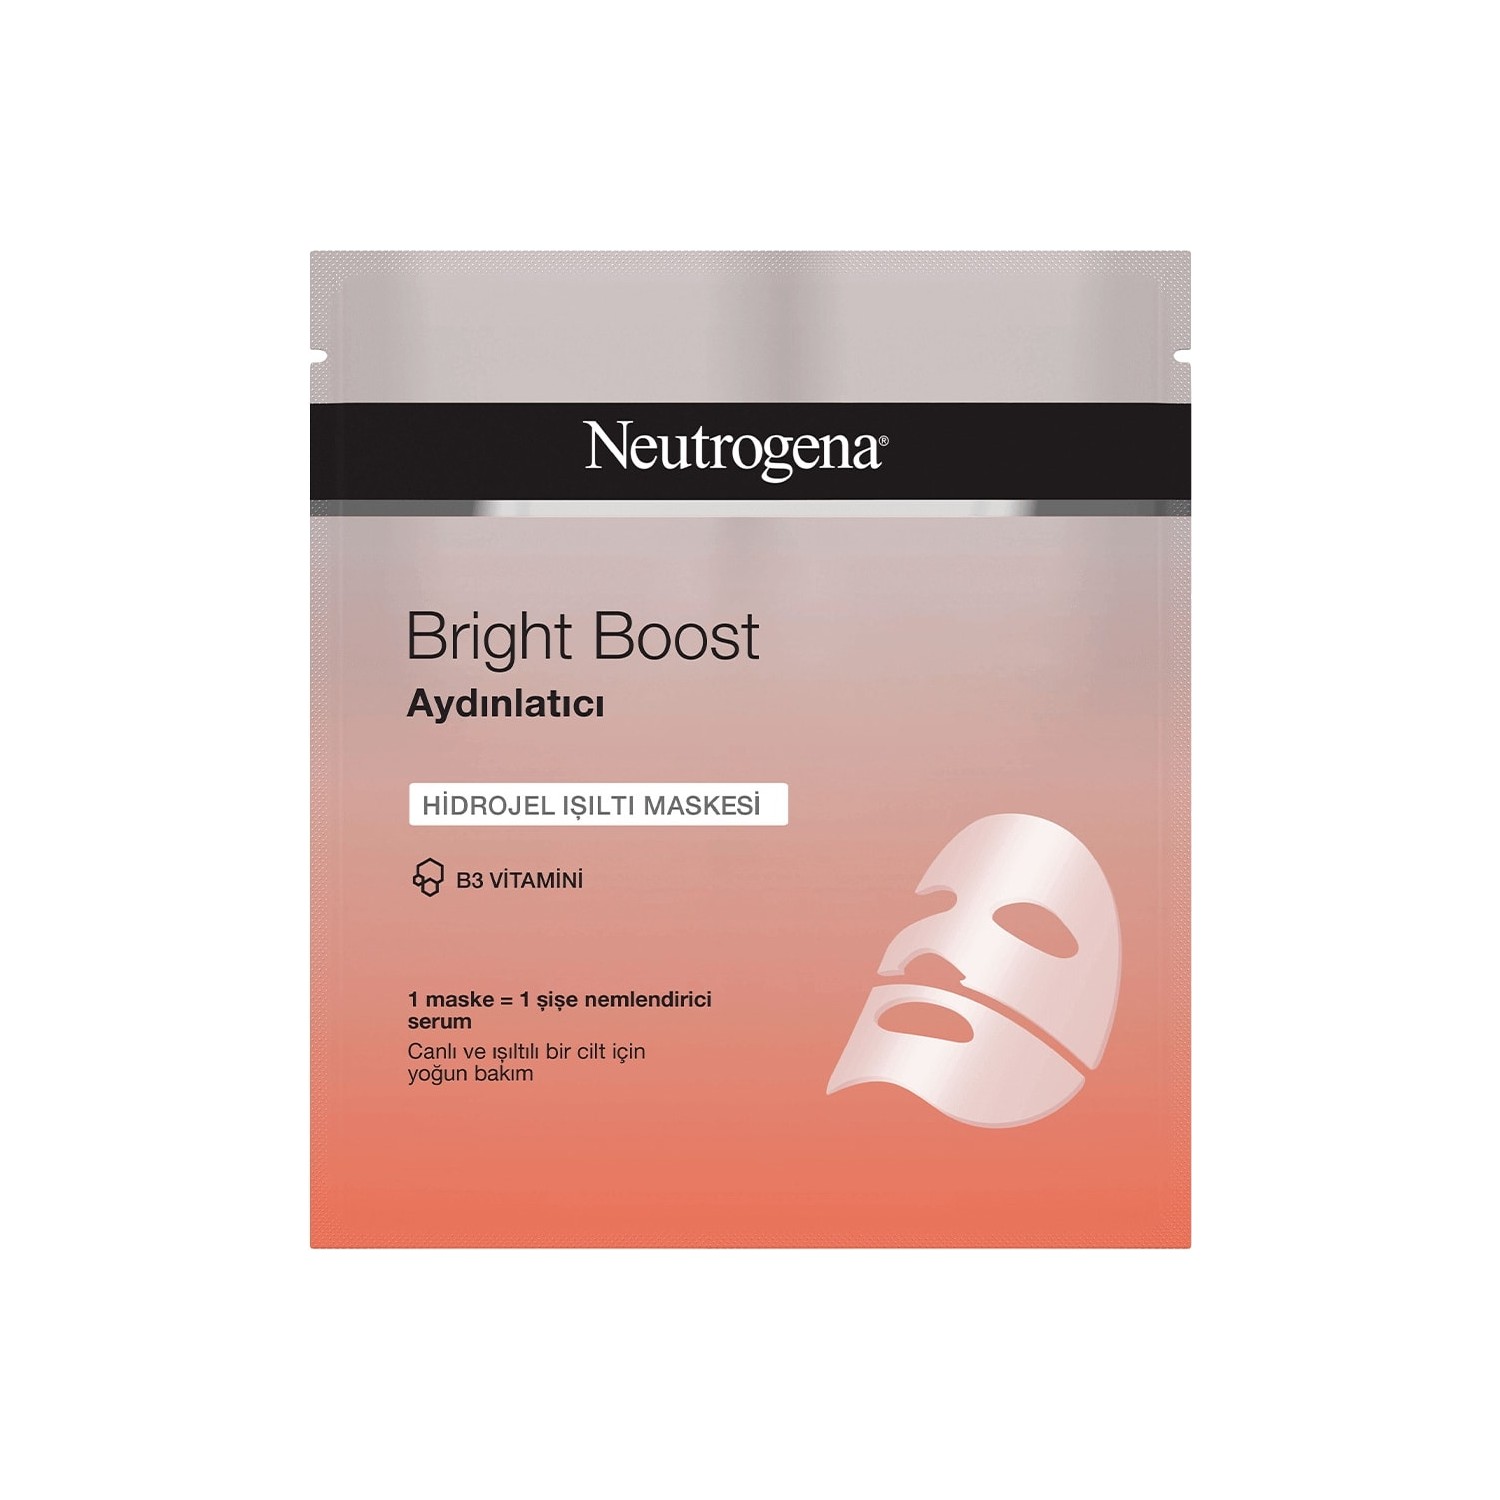 Маска для лица Neutrogena Bright Boost гидрогелевая для сияния кожи, 30 мл neutrogena hydrogel recovery mask purifying boost the detoxifier 1 fl oz 30 ml